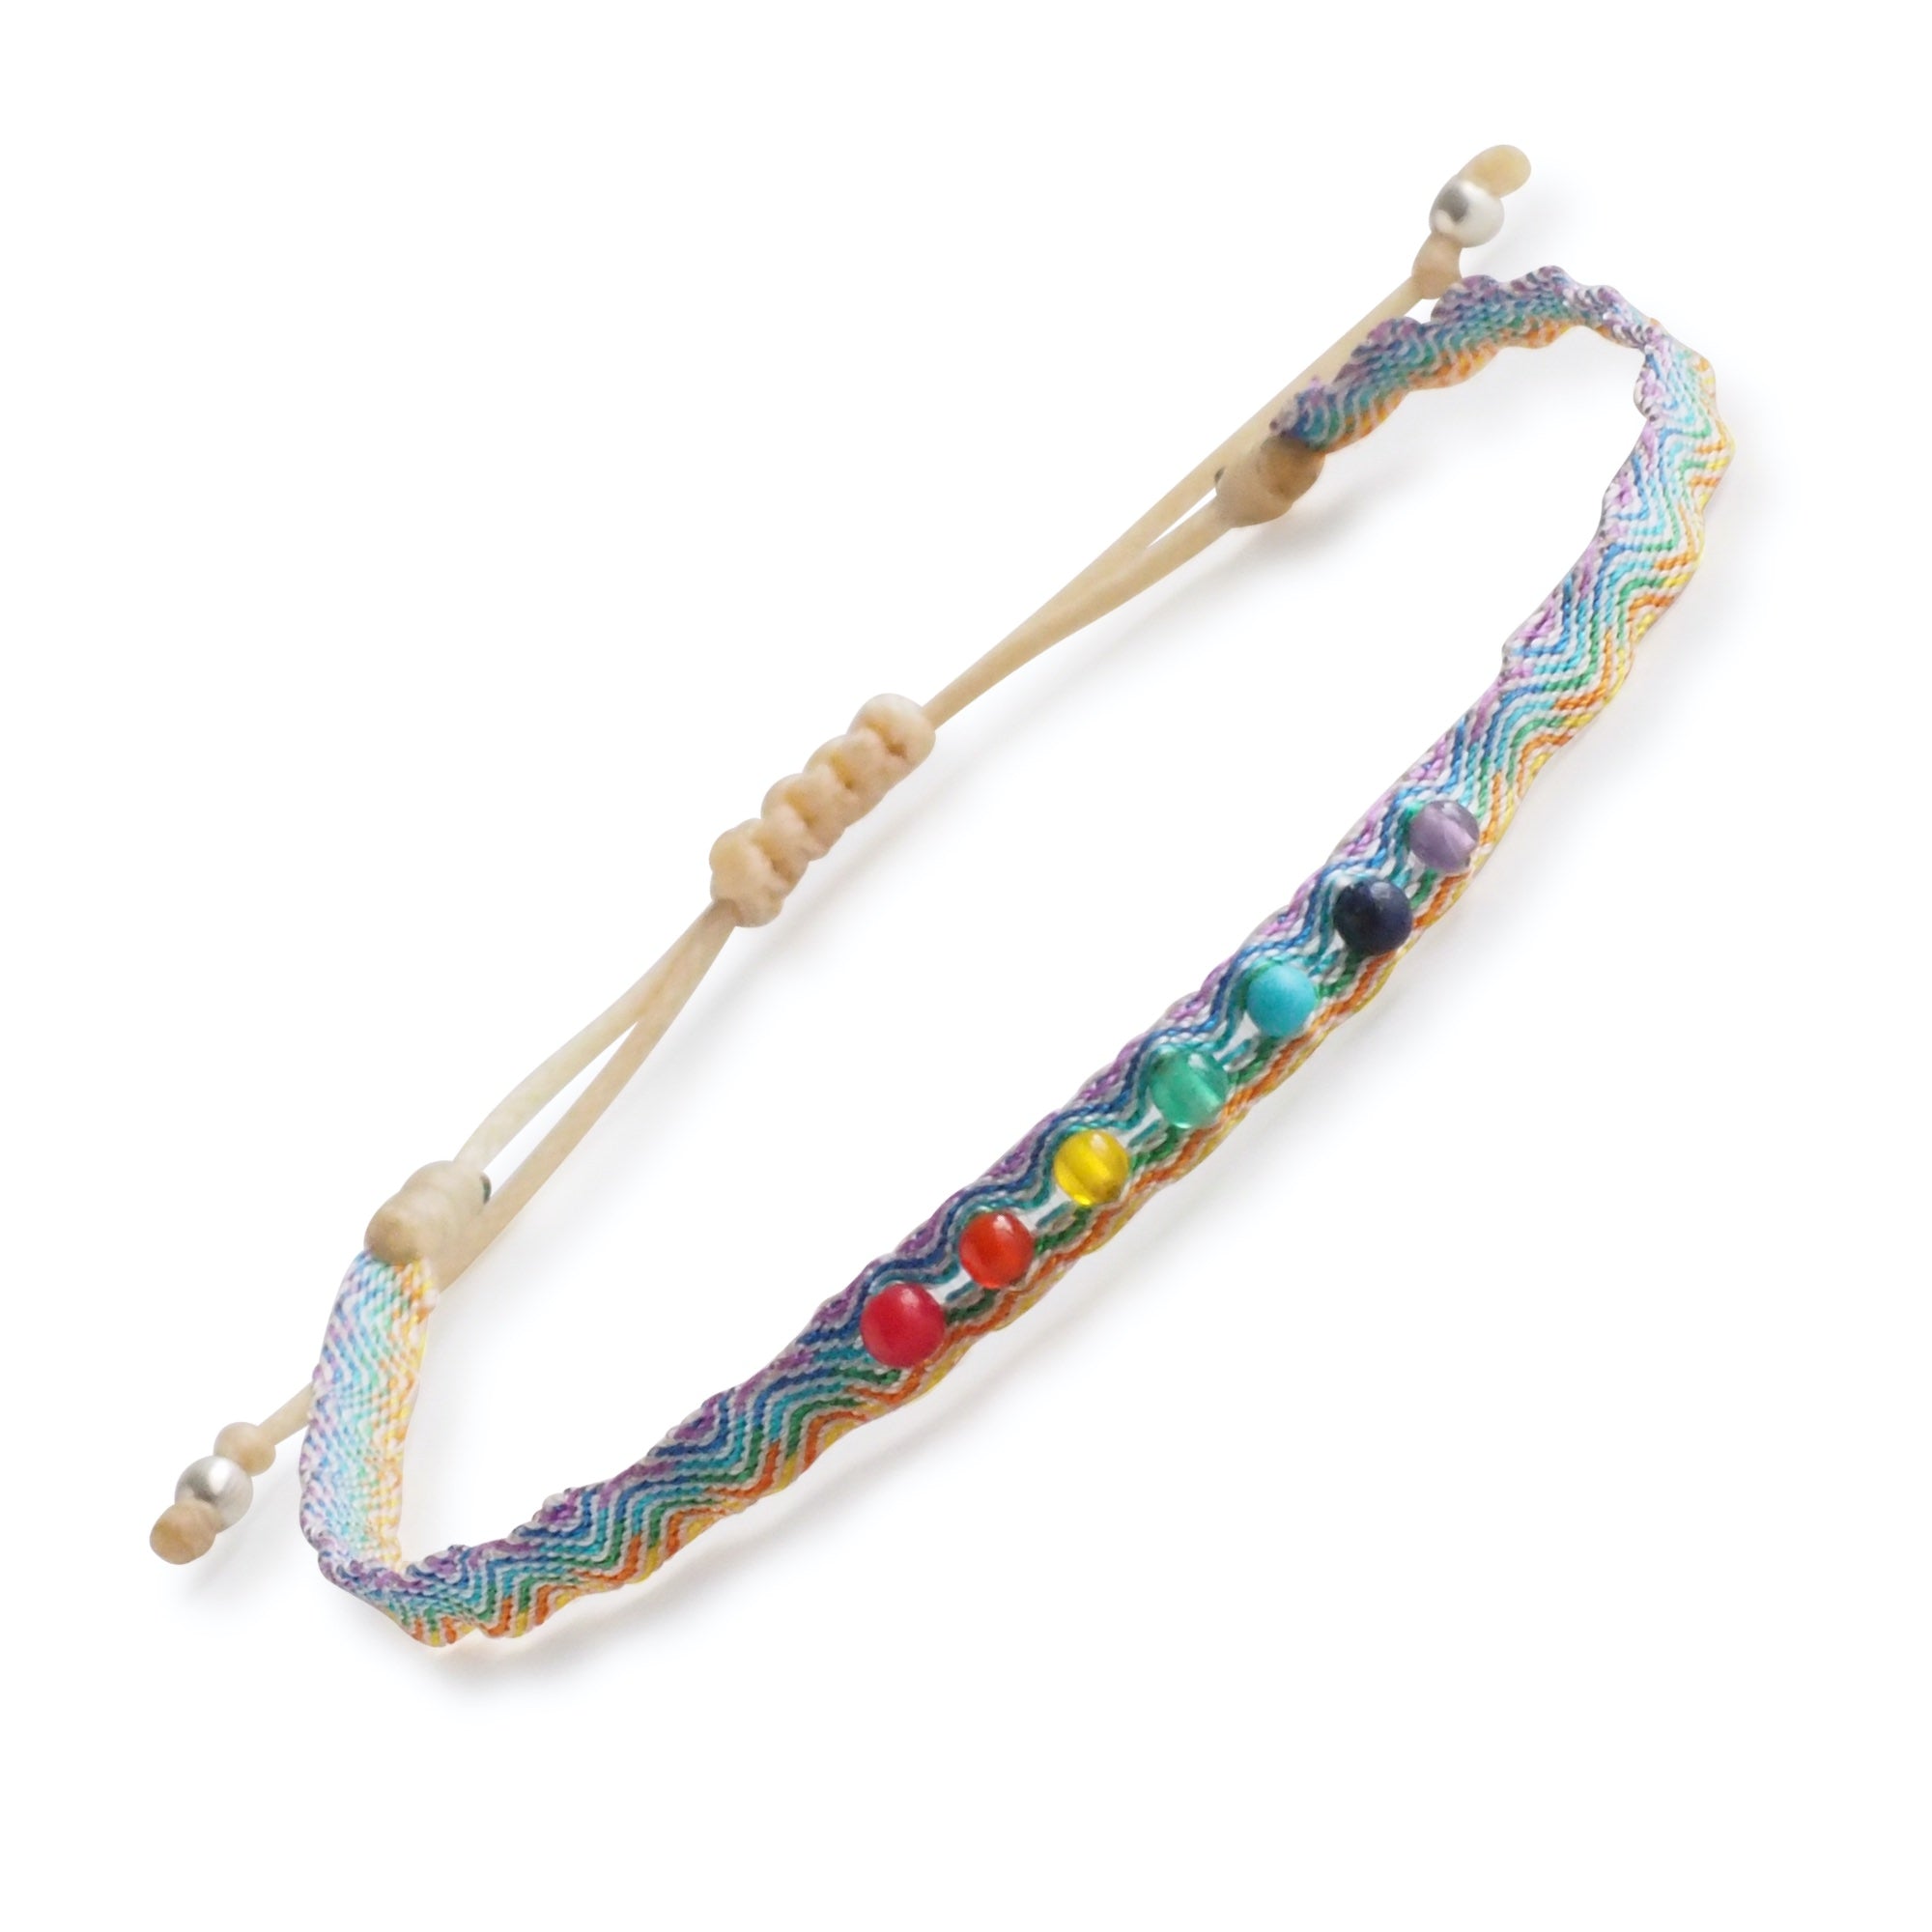 Egyptian Loom Harmony Chakra Bracelet light made with 40 polyester threads with 7 gemstones representing each chakra. Adjustable Bracelet